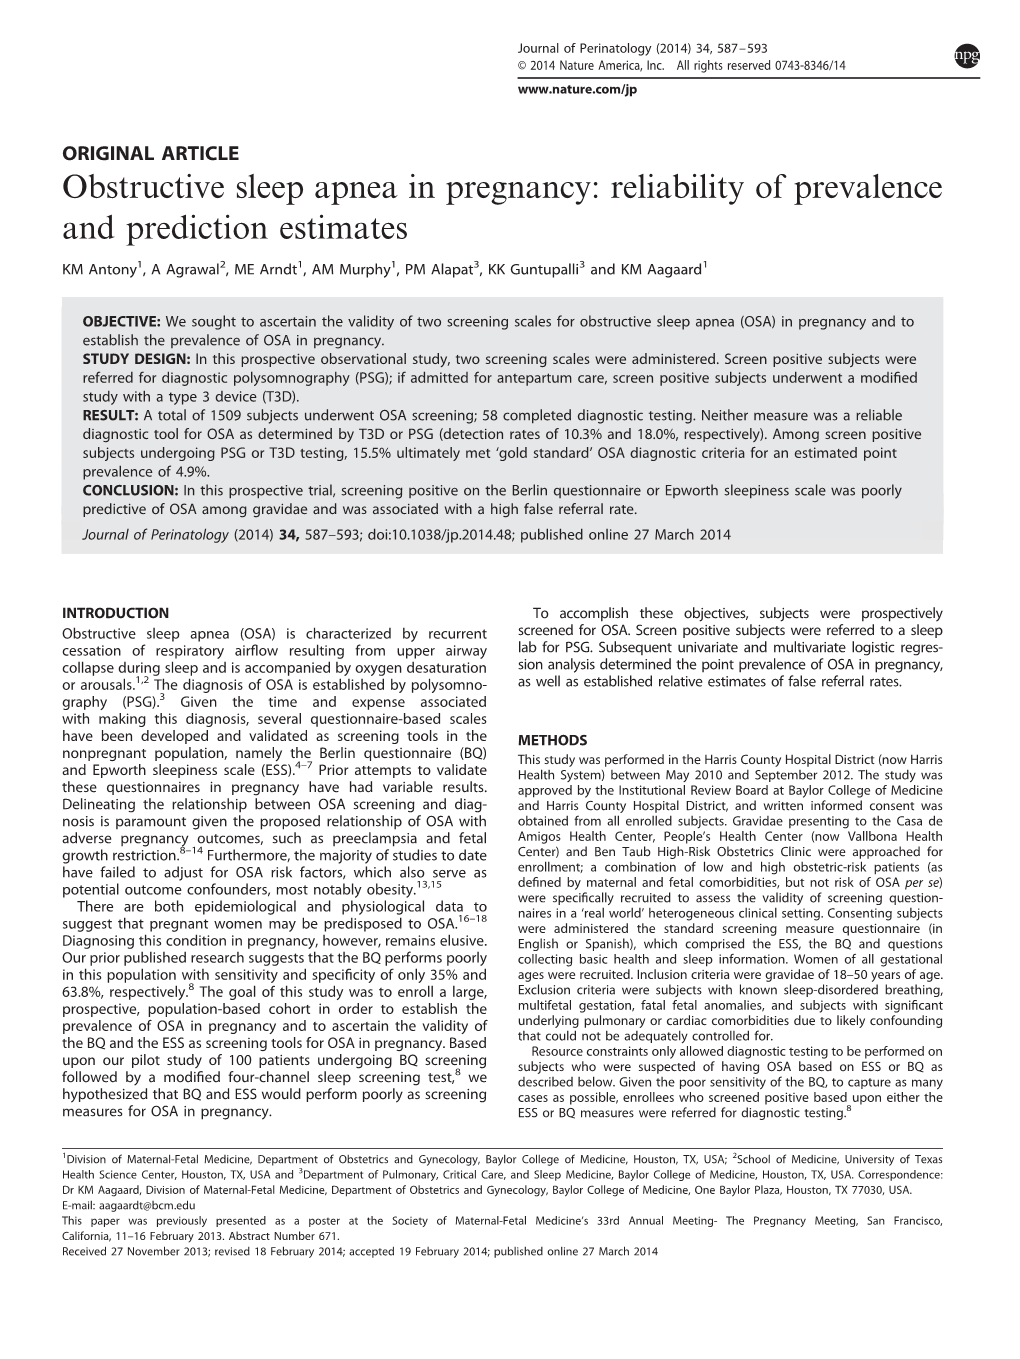 Obstructive Sleep Apnea in Pregnancy: Reliability of Prevalence and Prediction Estimates